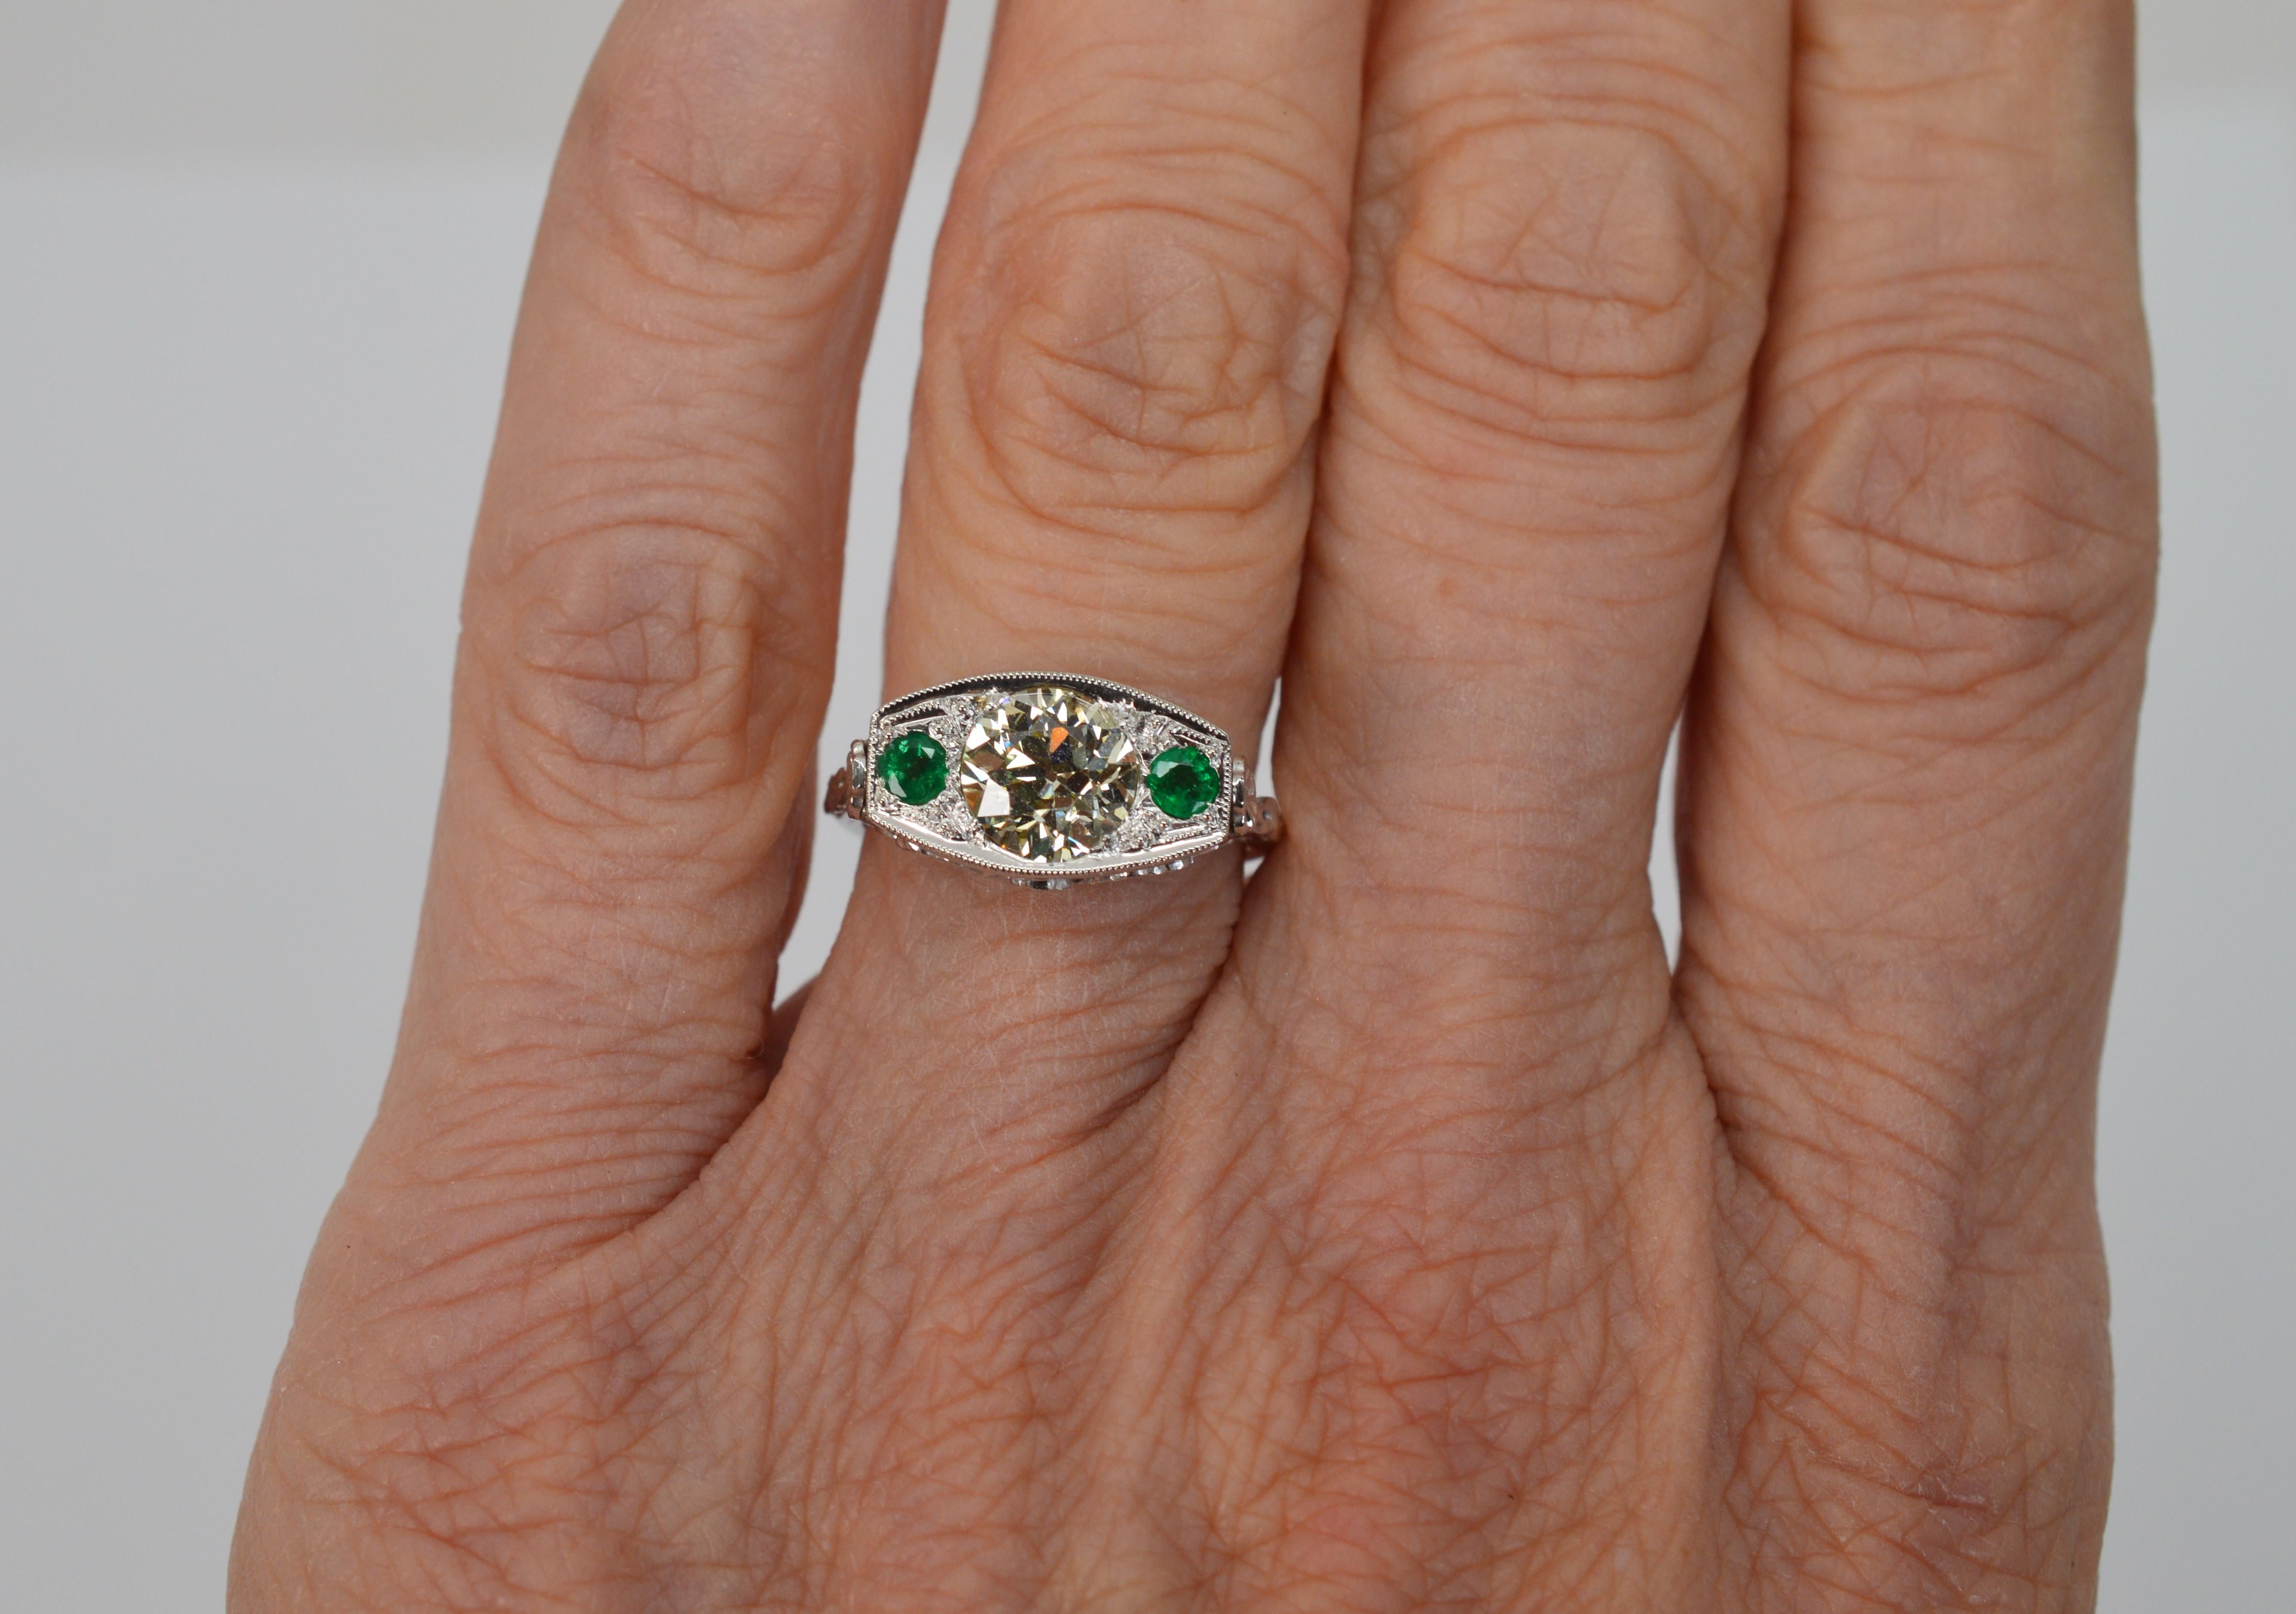 Women's Antique Edwardian Diamond Emerald 18 Karat White Gold Filigree Ring For Sale